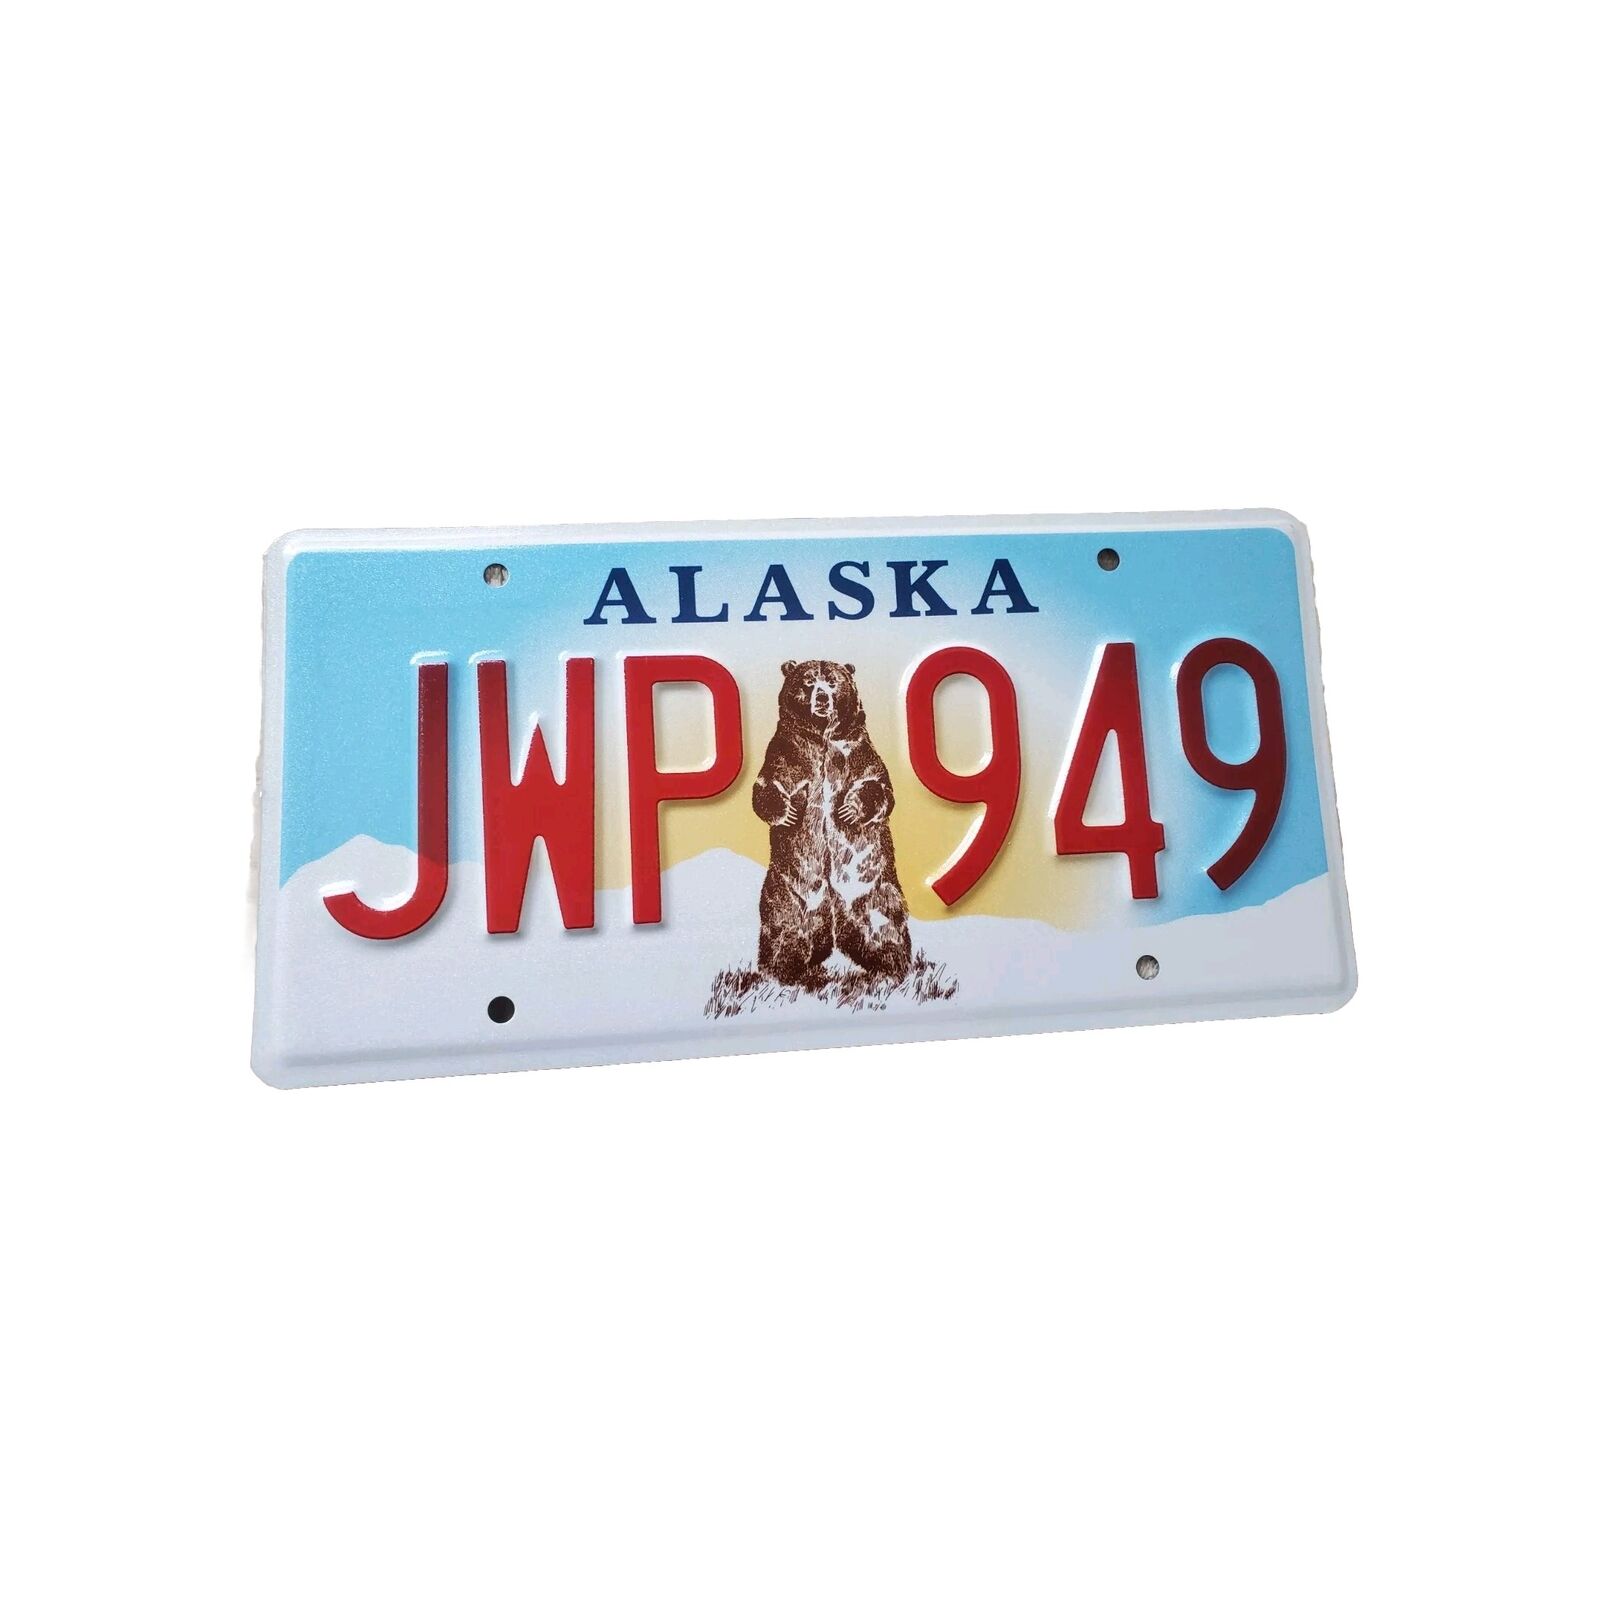 Alaska Standing Bear License Plate #JWP949  Expired 3 Years    BUY NOW $9.99